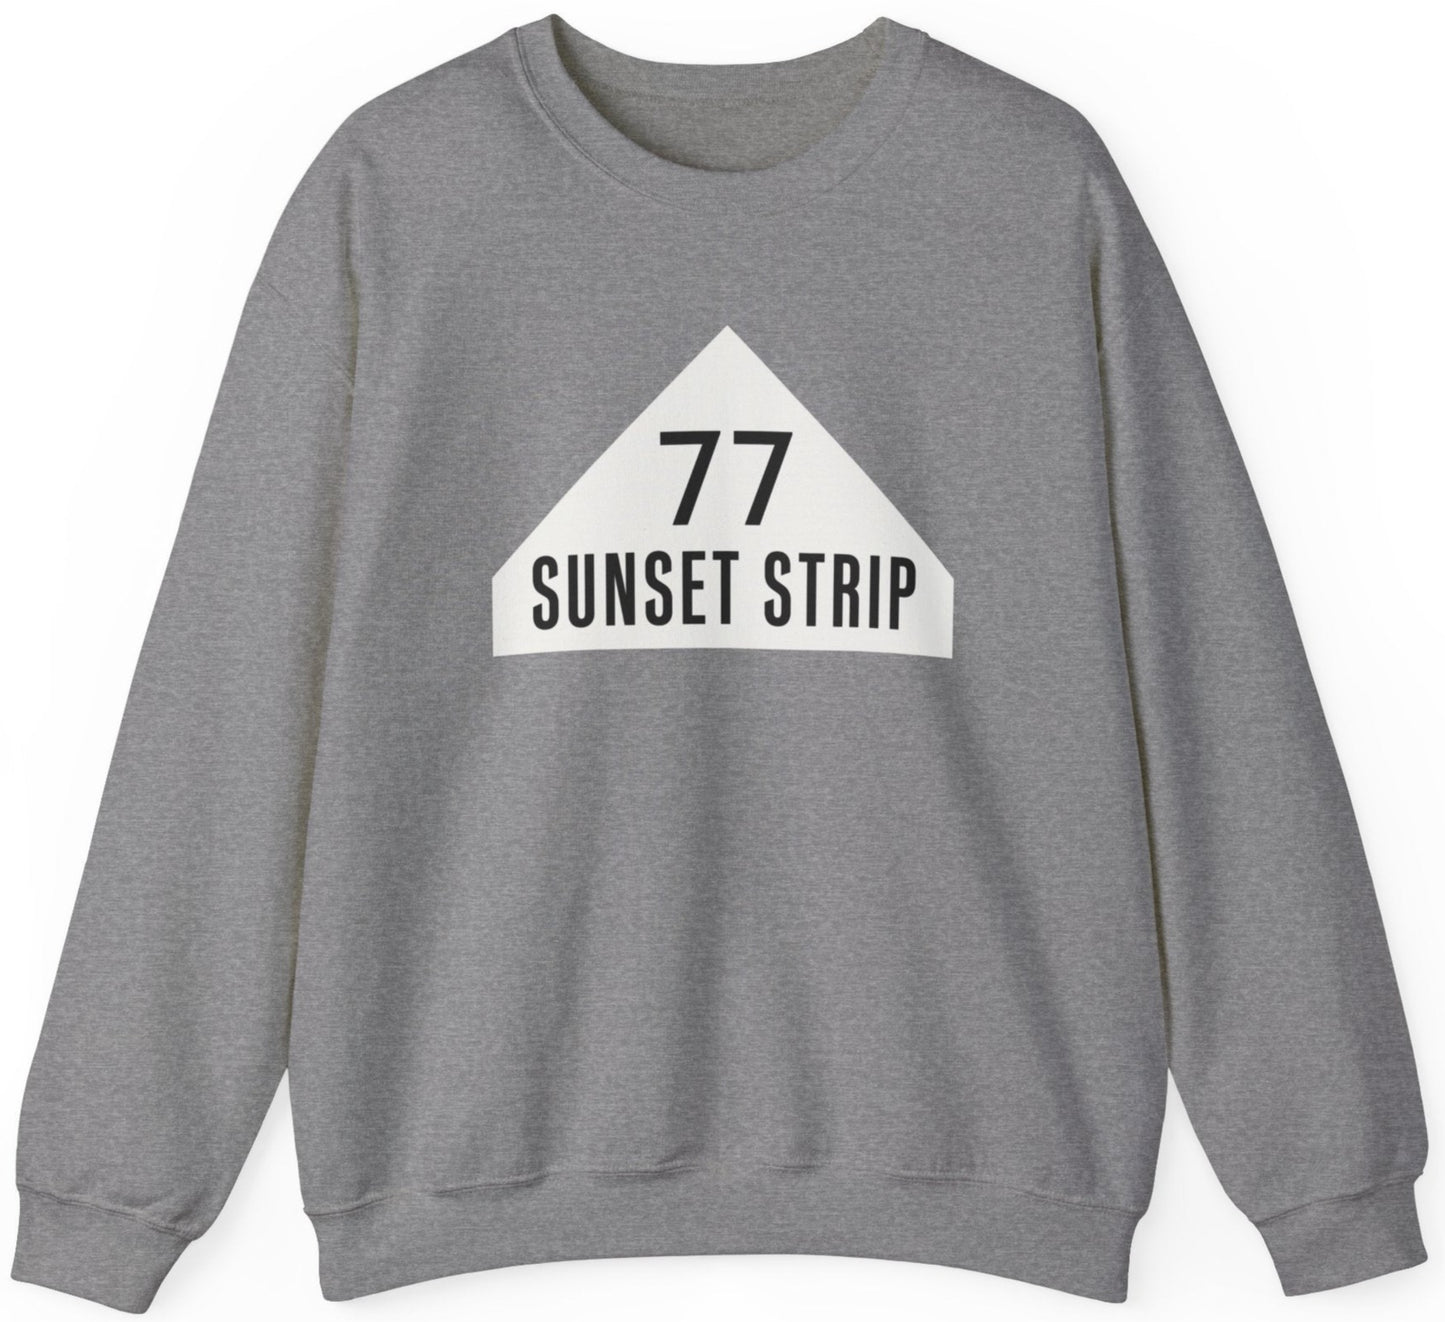 77 Sunset Strip sweatshirt